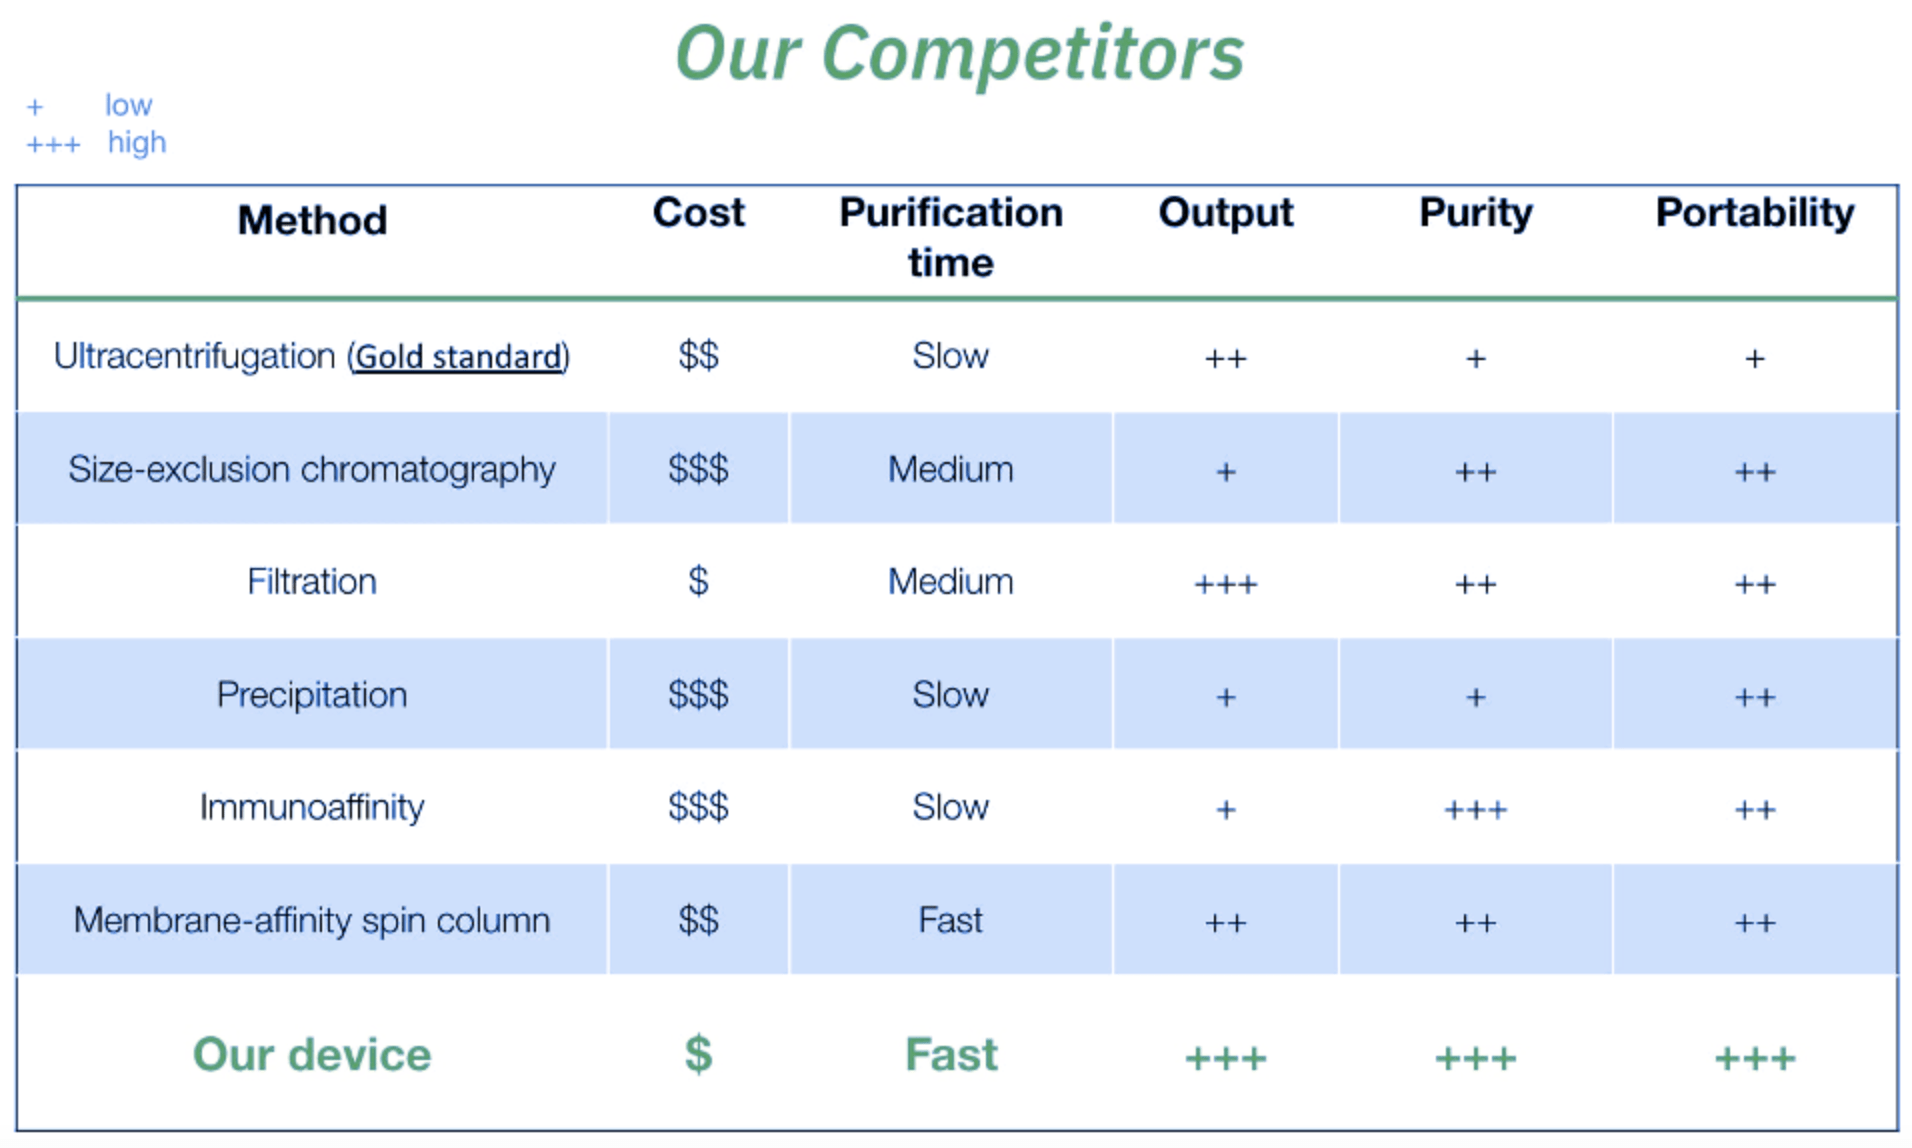 Acytronix-Compatition-Comparision-Companies